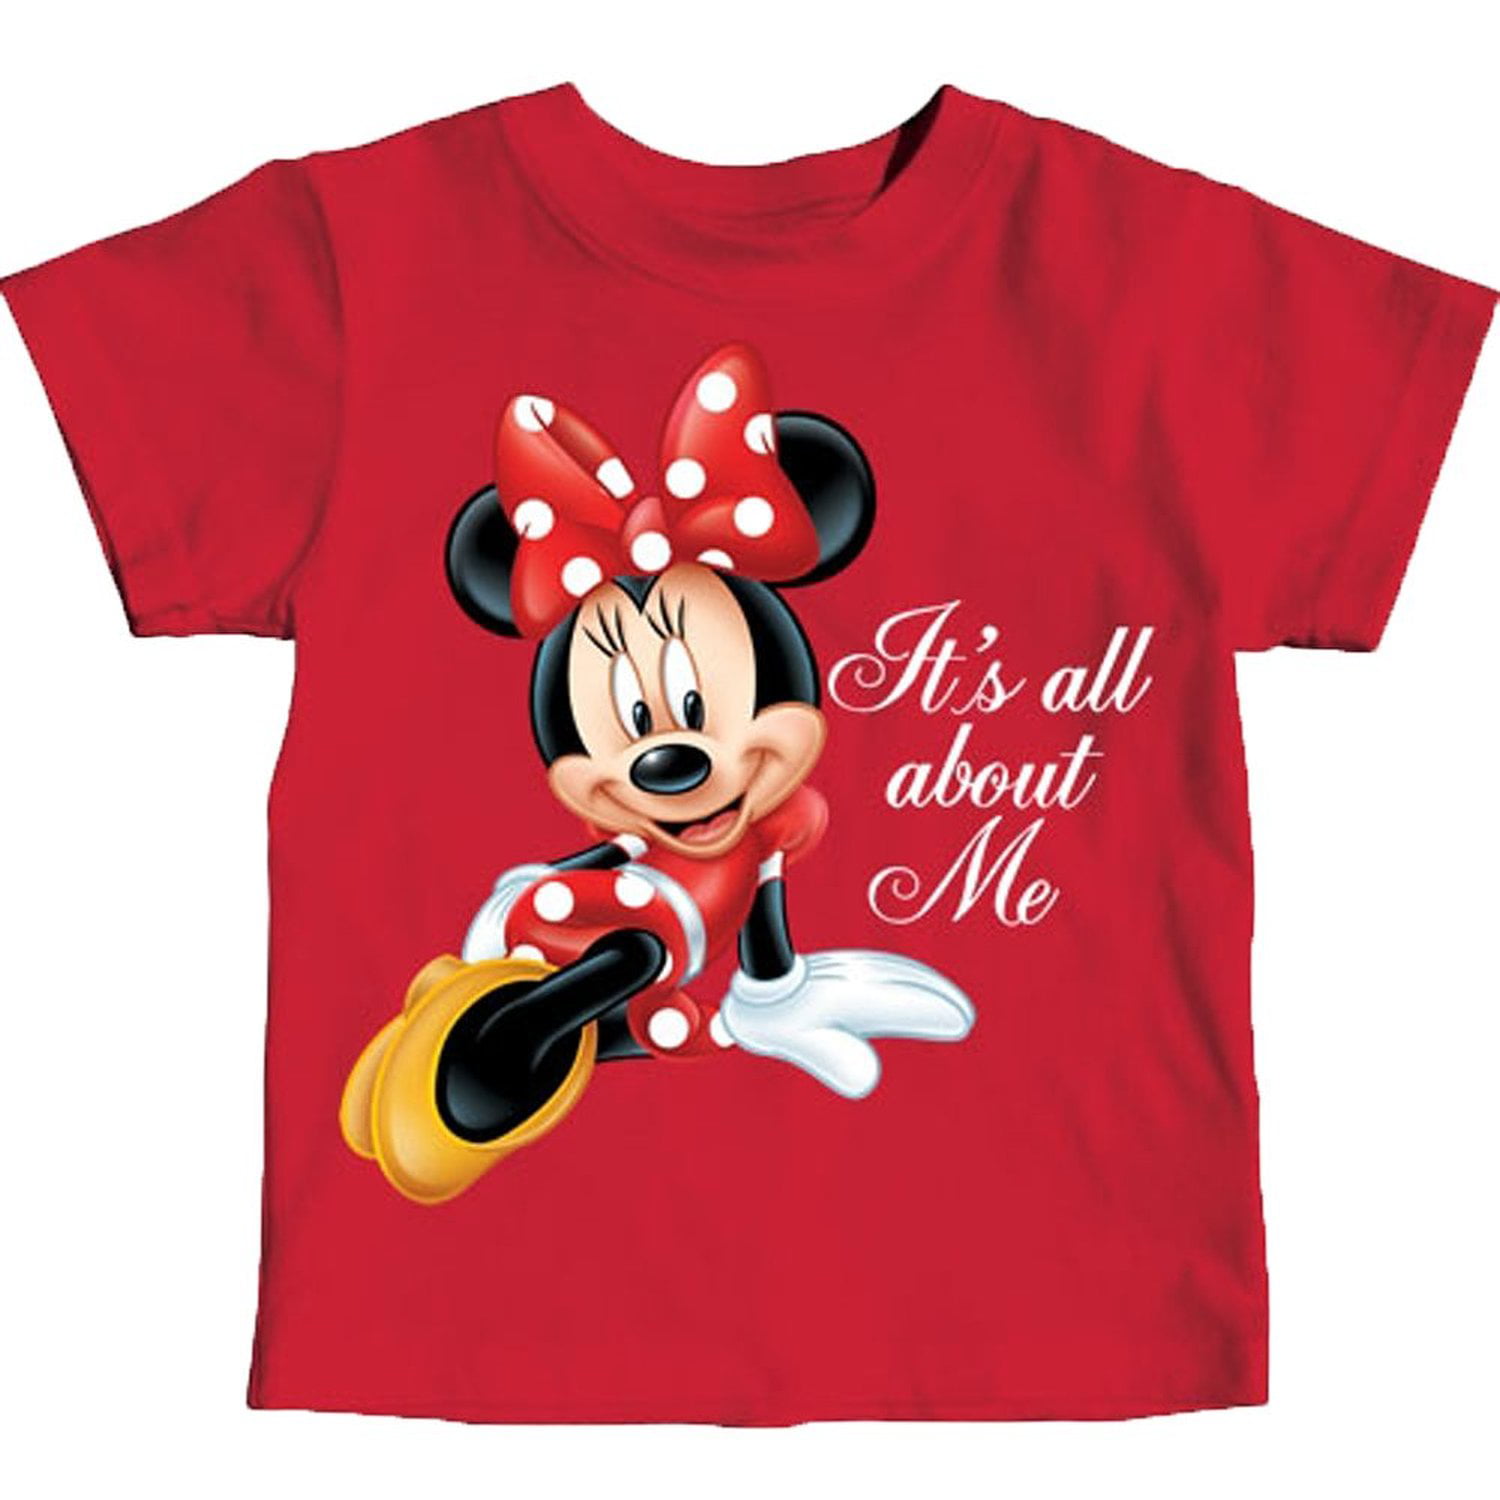 Neu Disney Minnie Mouse Tunika T-Shirt Langarm Shirt Baumwolle pink 80 86 92 